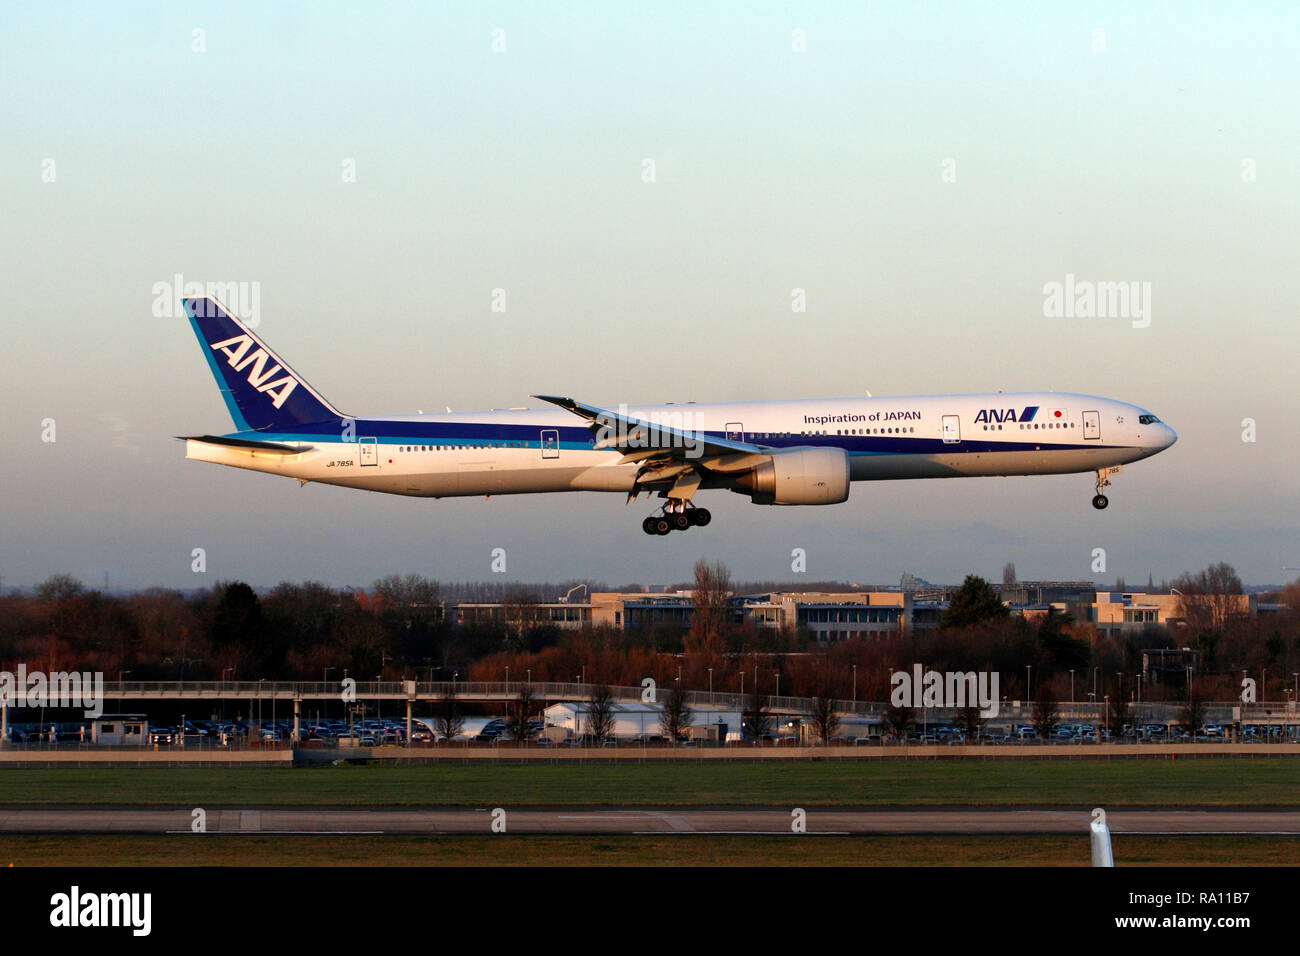 Boeing 777-300, ANA, JA785A, All Nippon Airways, landing at Heathrow, London airport terminal 5 runway. UK Stock Photo